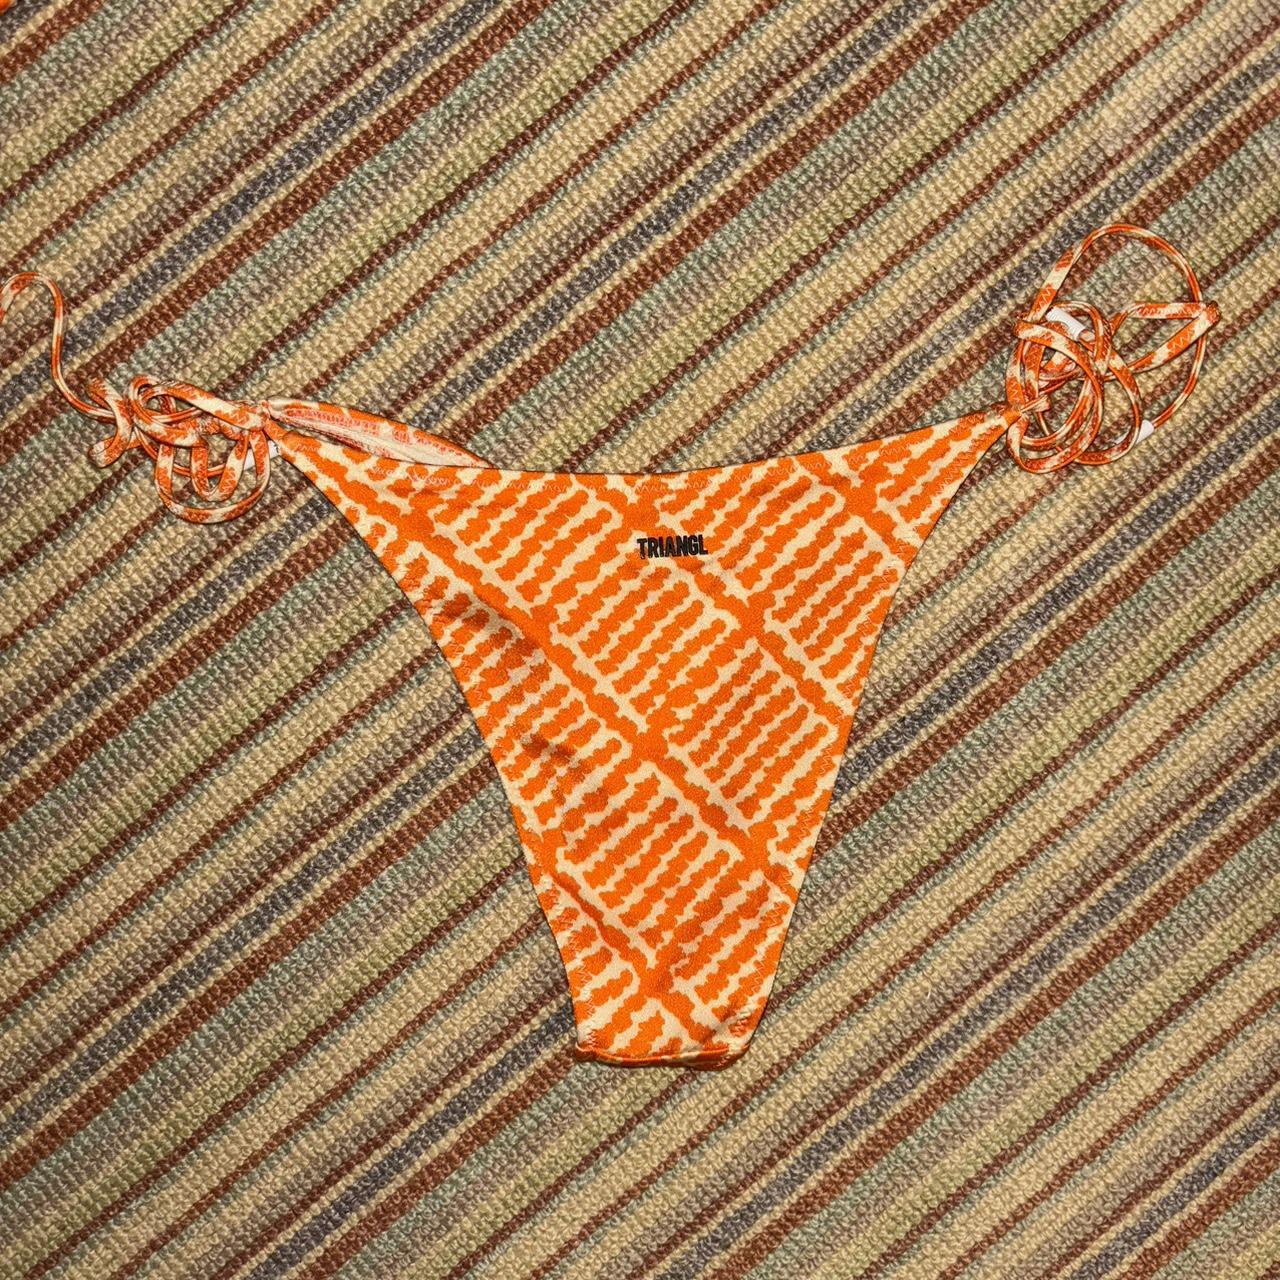 triangl orange bathing suit - Depop